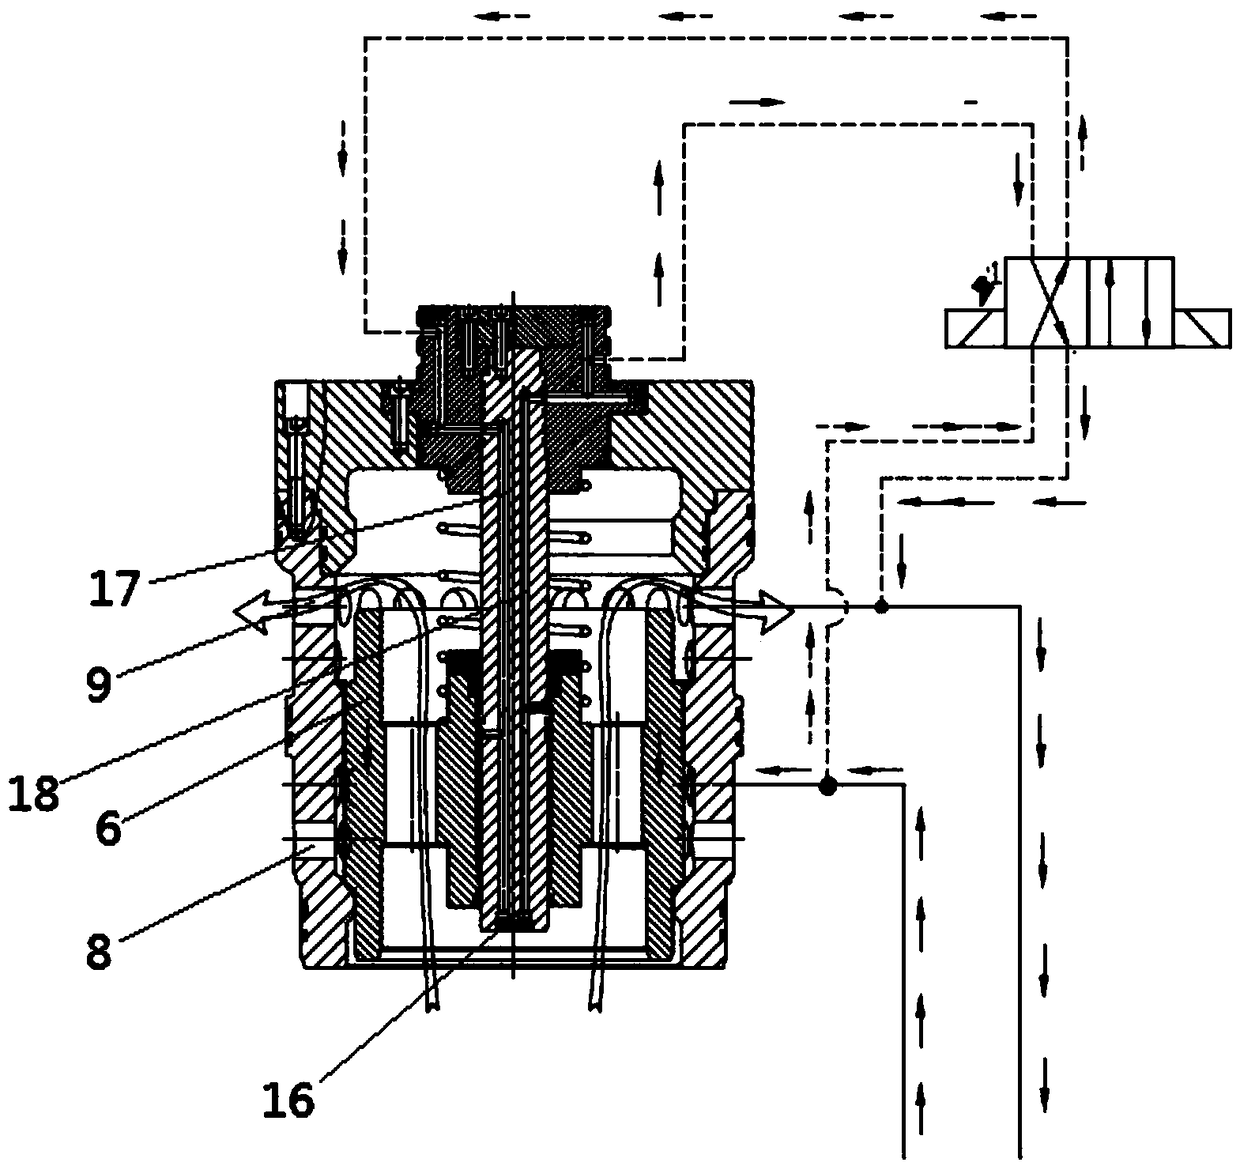 High-flow dynamic output control method of cartridge valve and cartridge valve